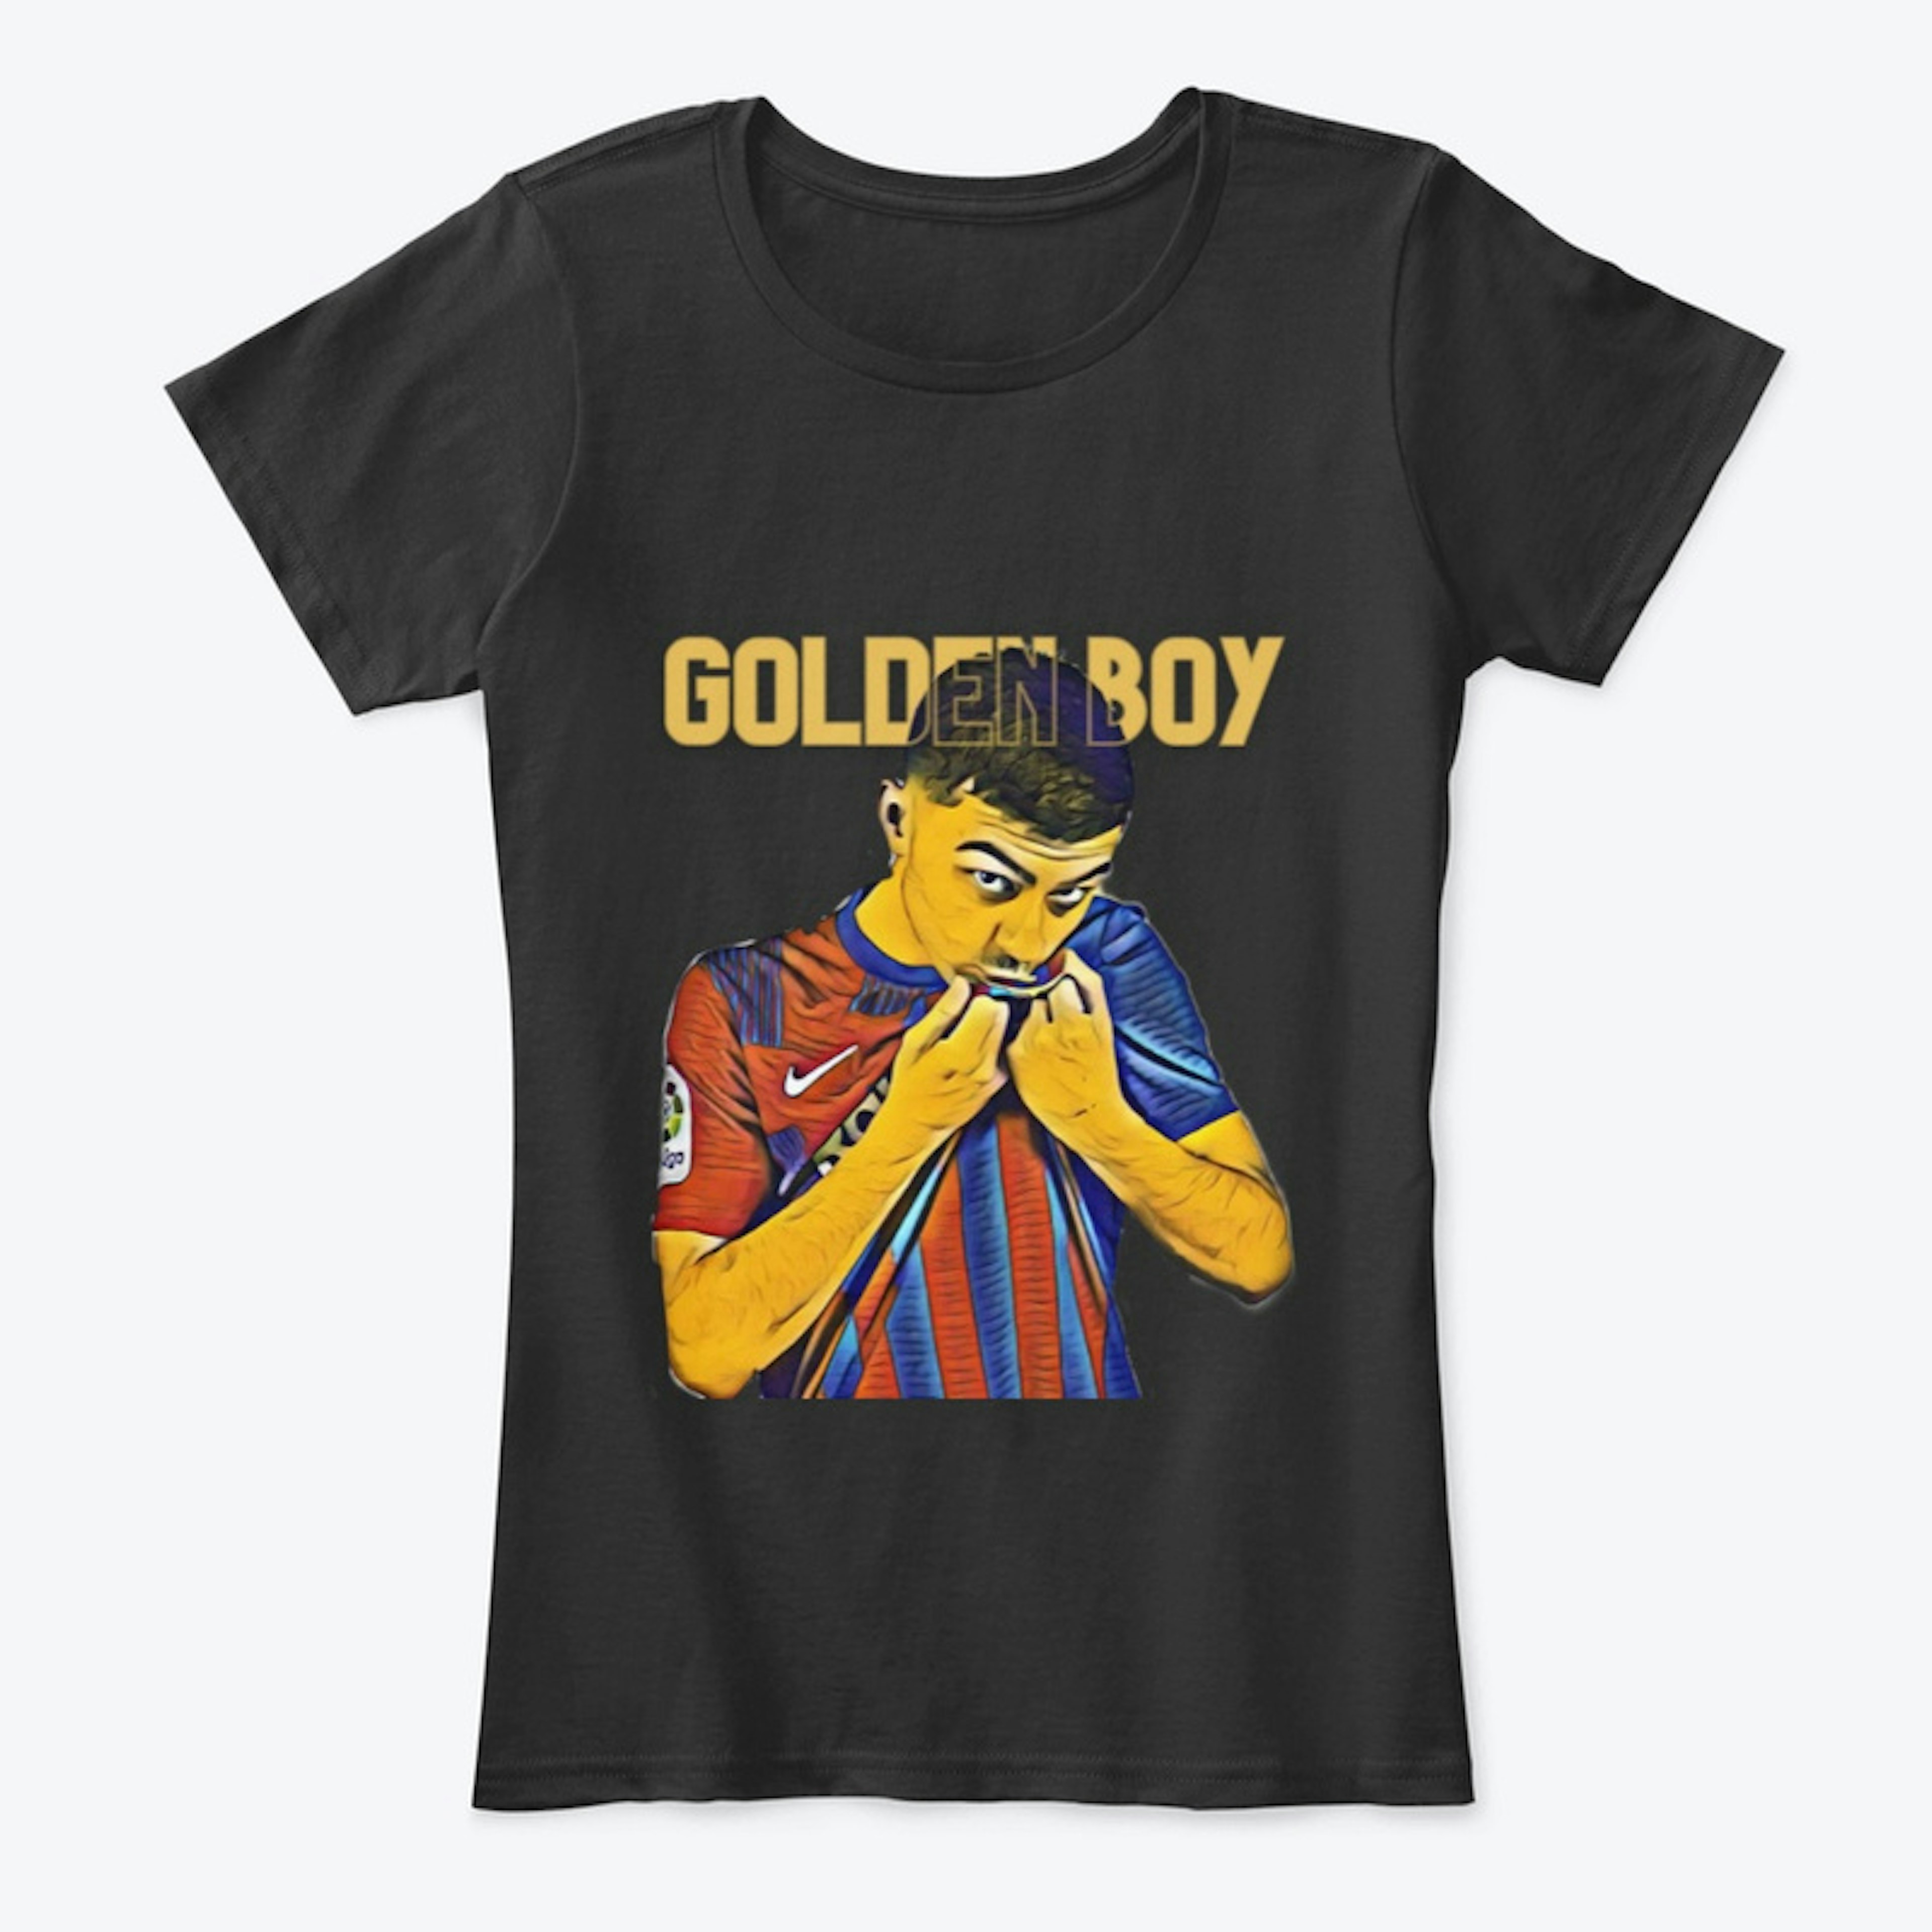 Pedri #GoldenBoy Fan Design